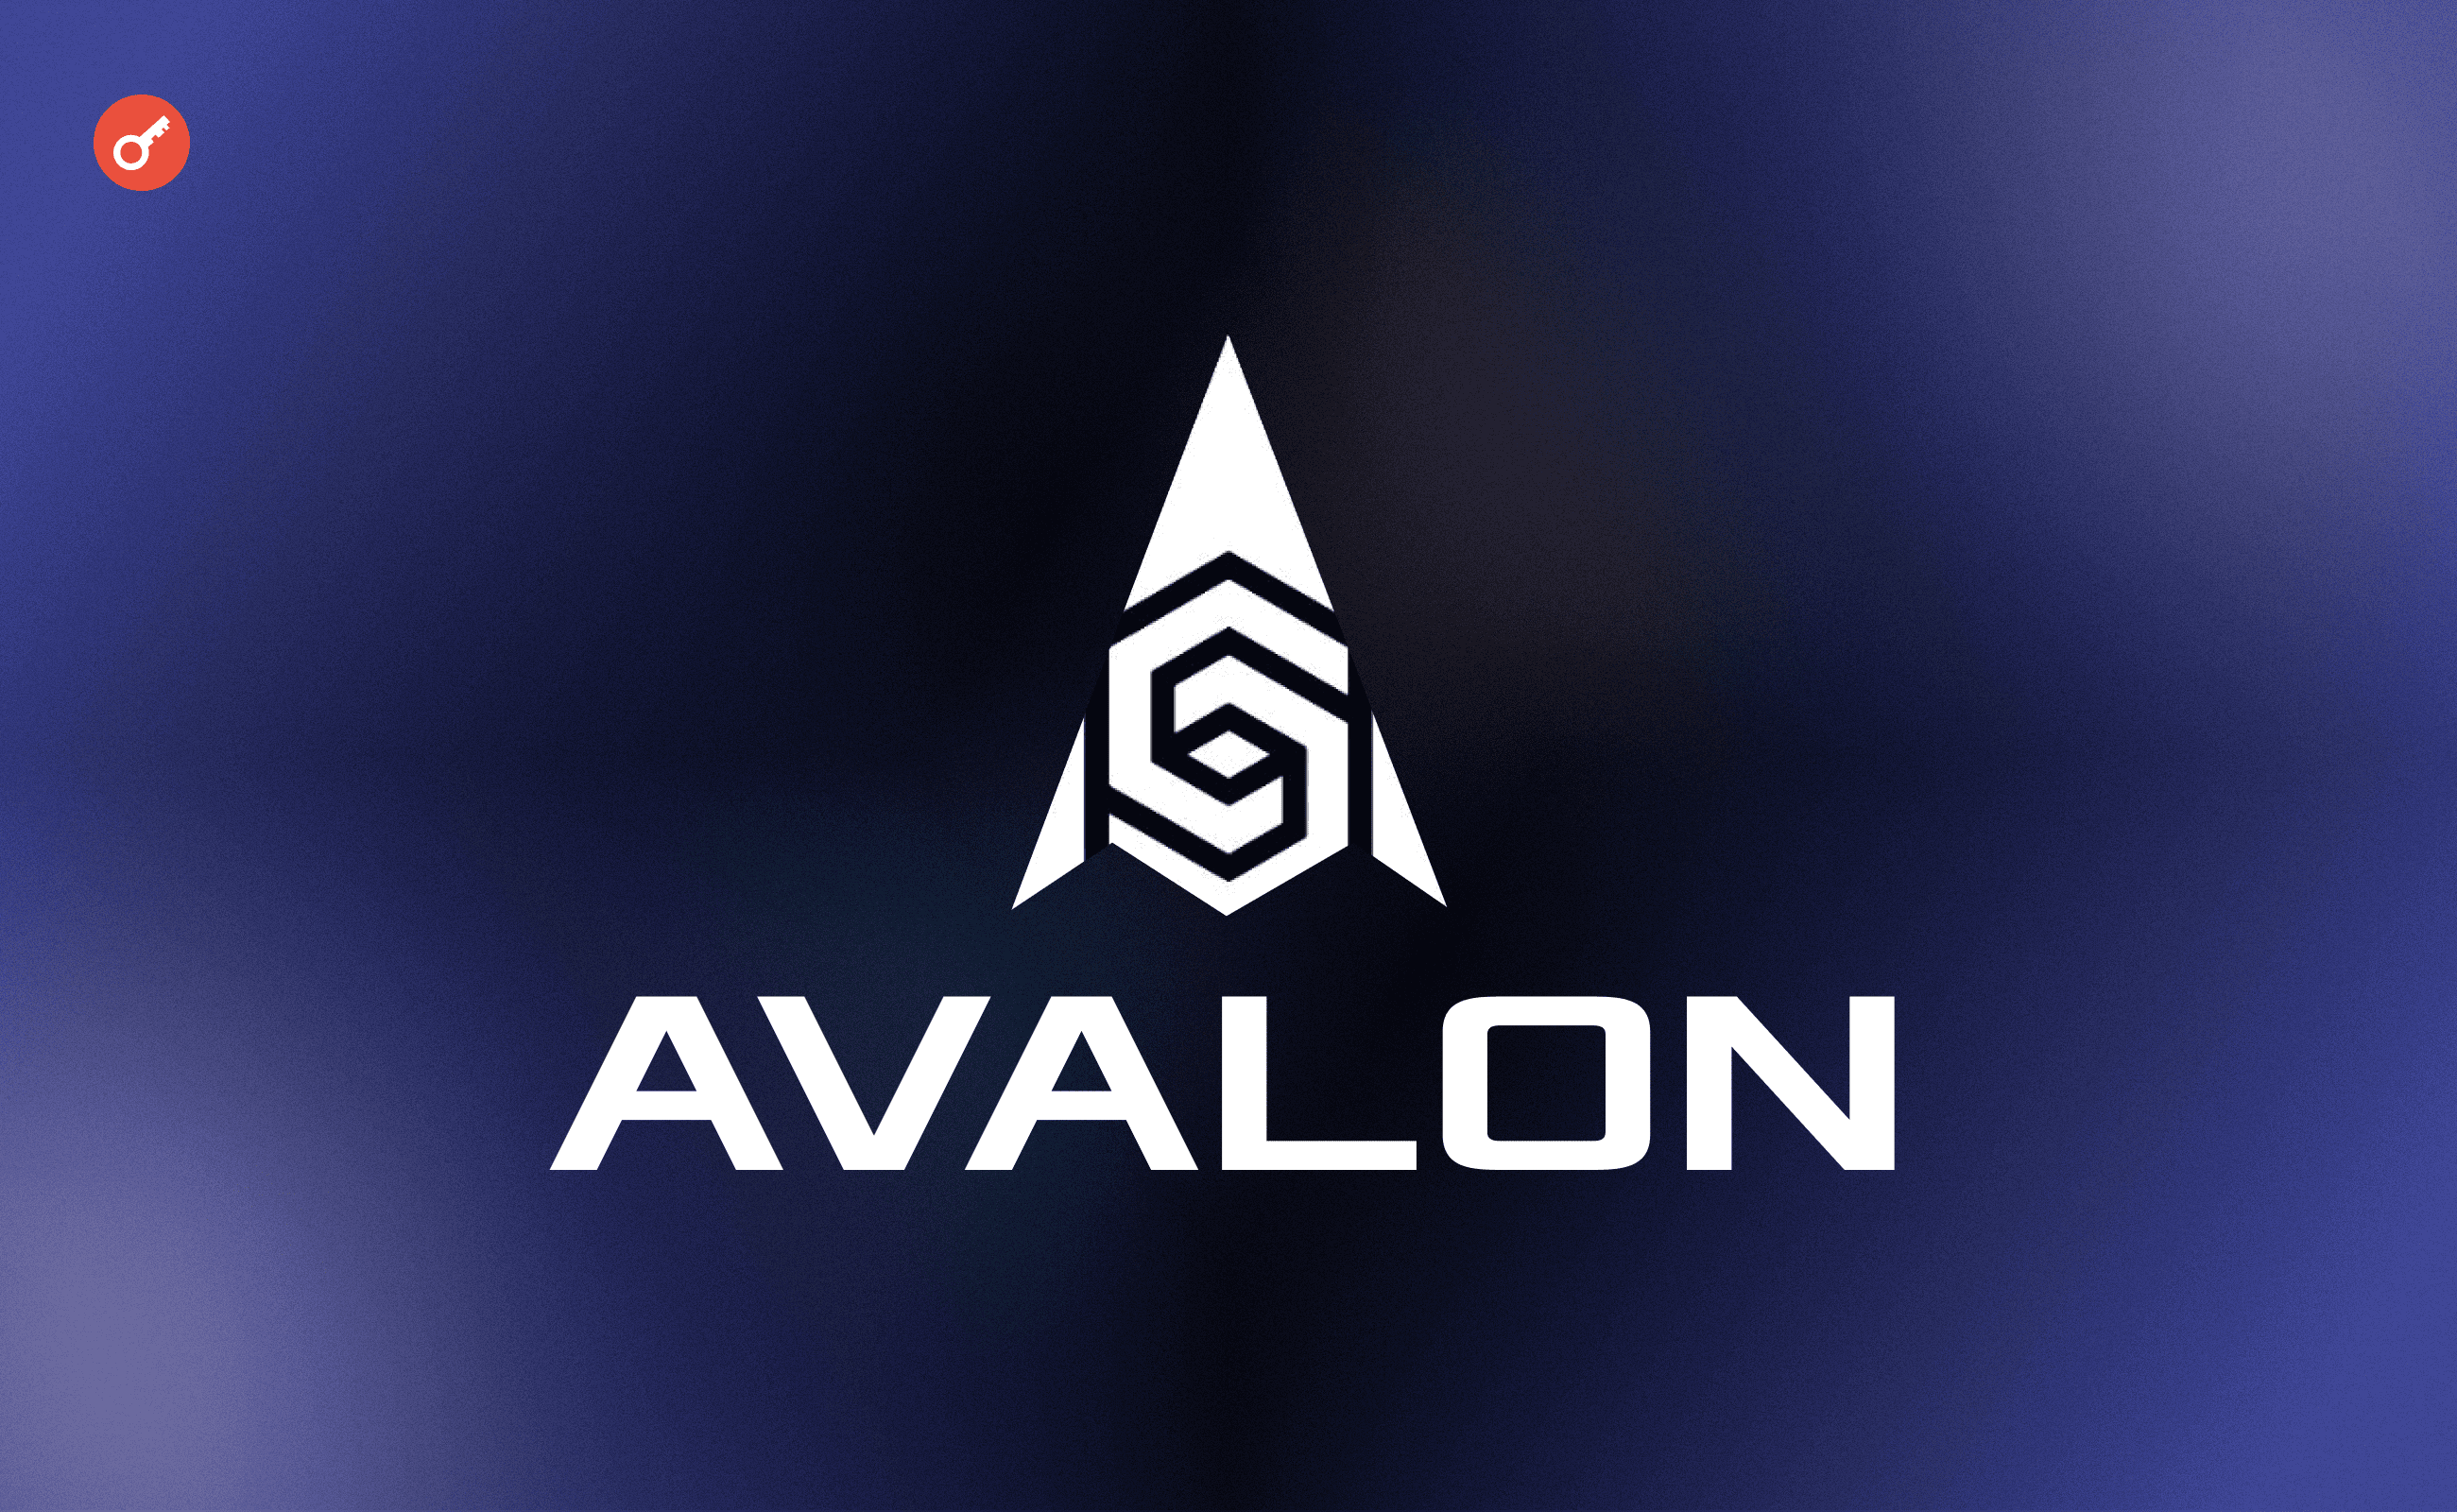 Avalon: perform the task and get the points. Заглавный коллаж статьи.